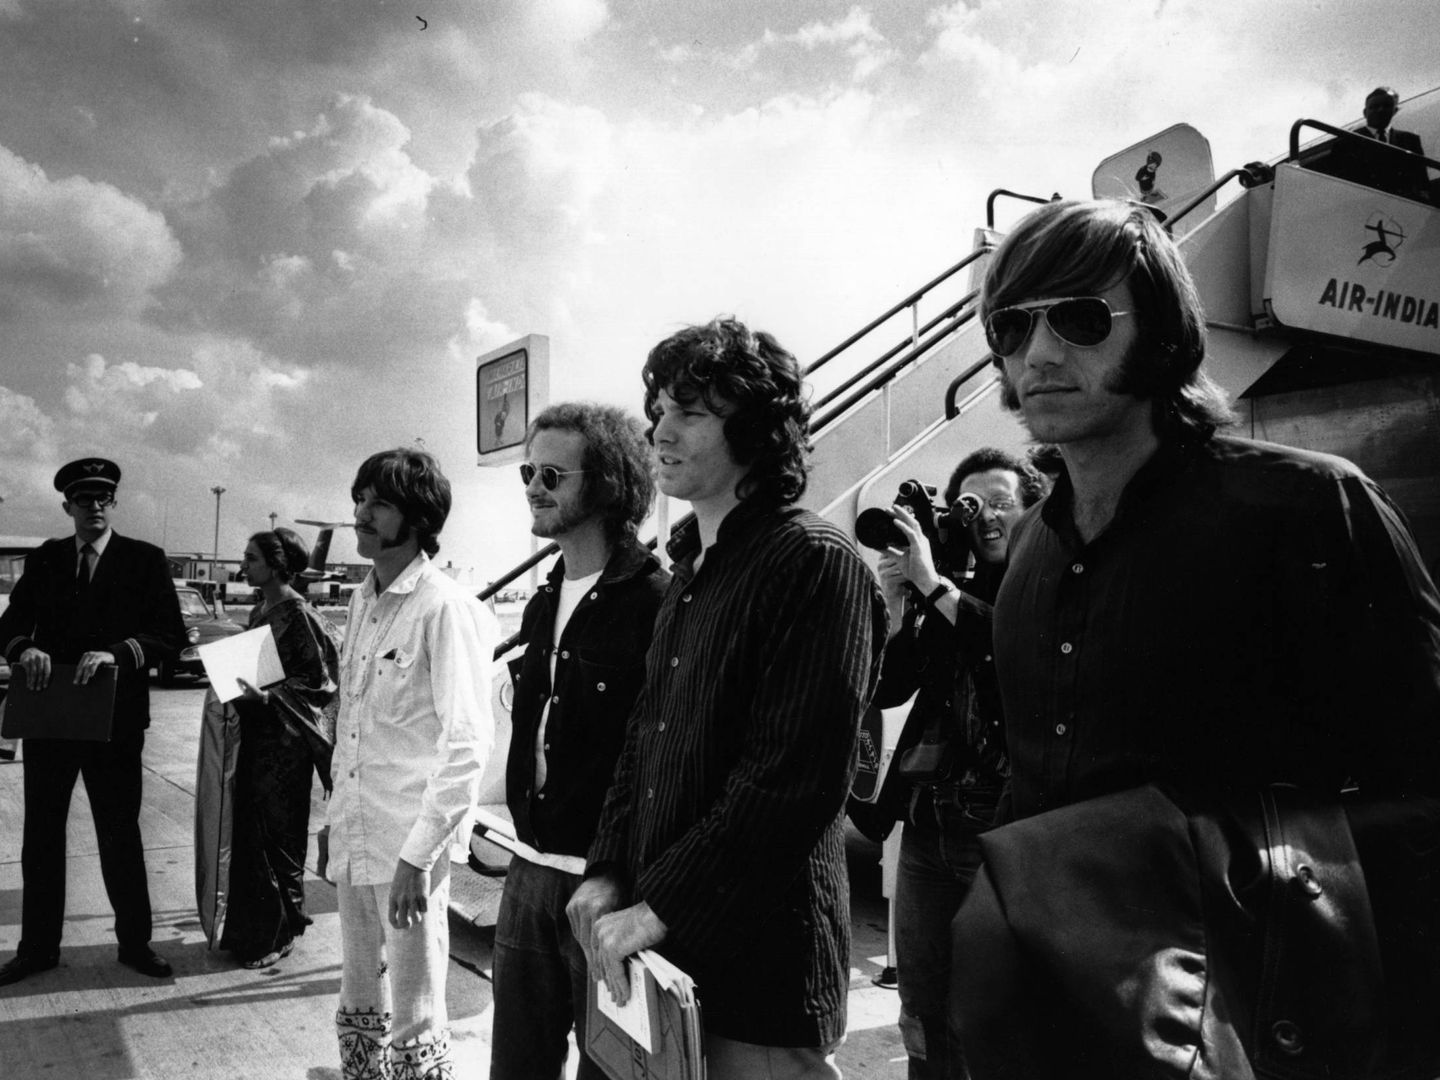 El grupo americano The Doors en el aeropuerto de Londres en 1968 (Foto de Express/Express/Getty Images).